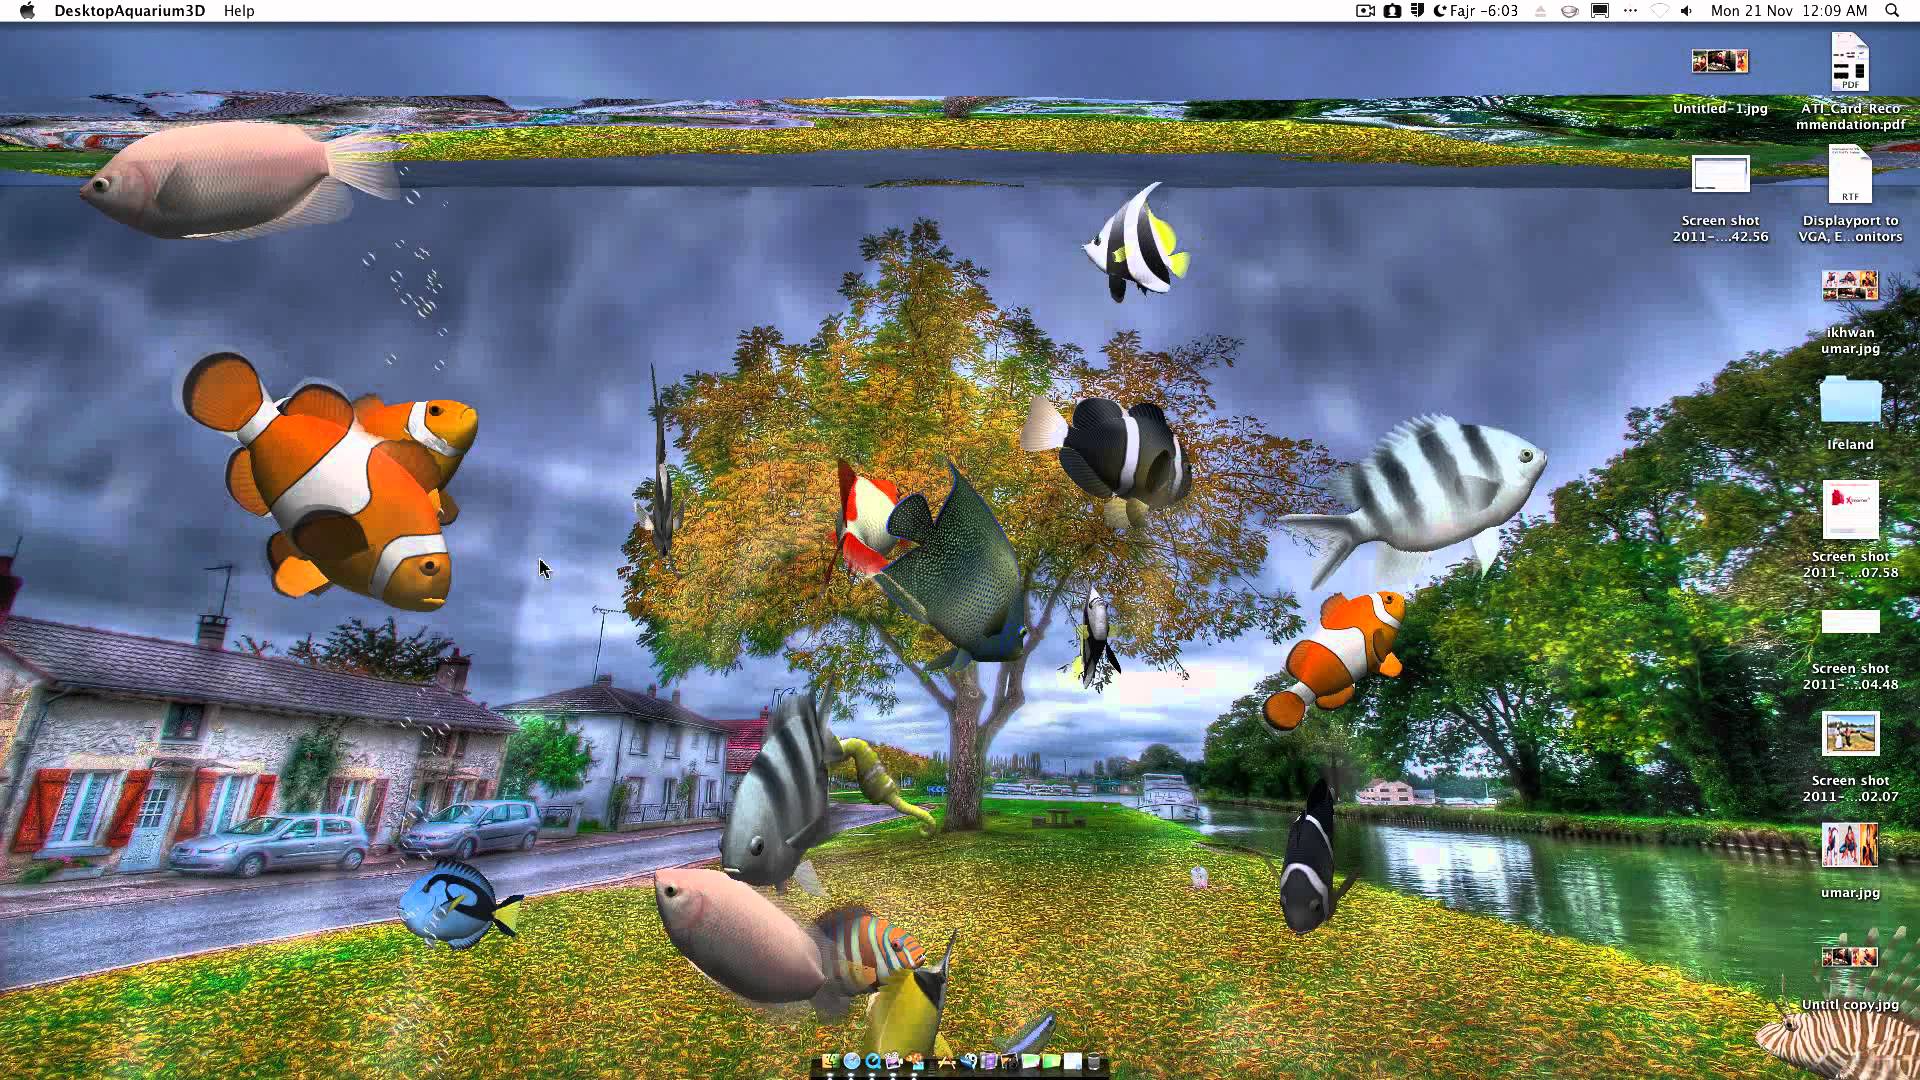 Free download Desktop Aquarium 3D Live Wallpaper on Imac [1920x1080] for  your Desktop, Mobile & Tablet | Explore 44+ Live Fish Wallpaper for Desktop  | Live Fish Wallpaper, Live Fish Tank Wallpaper,